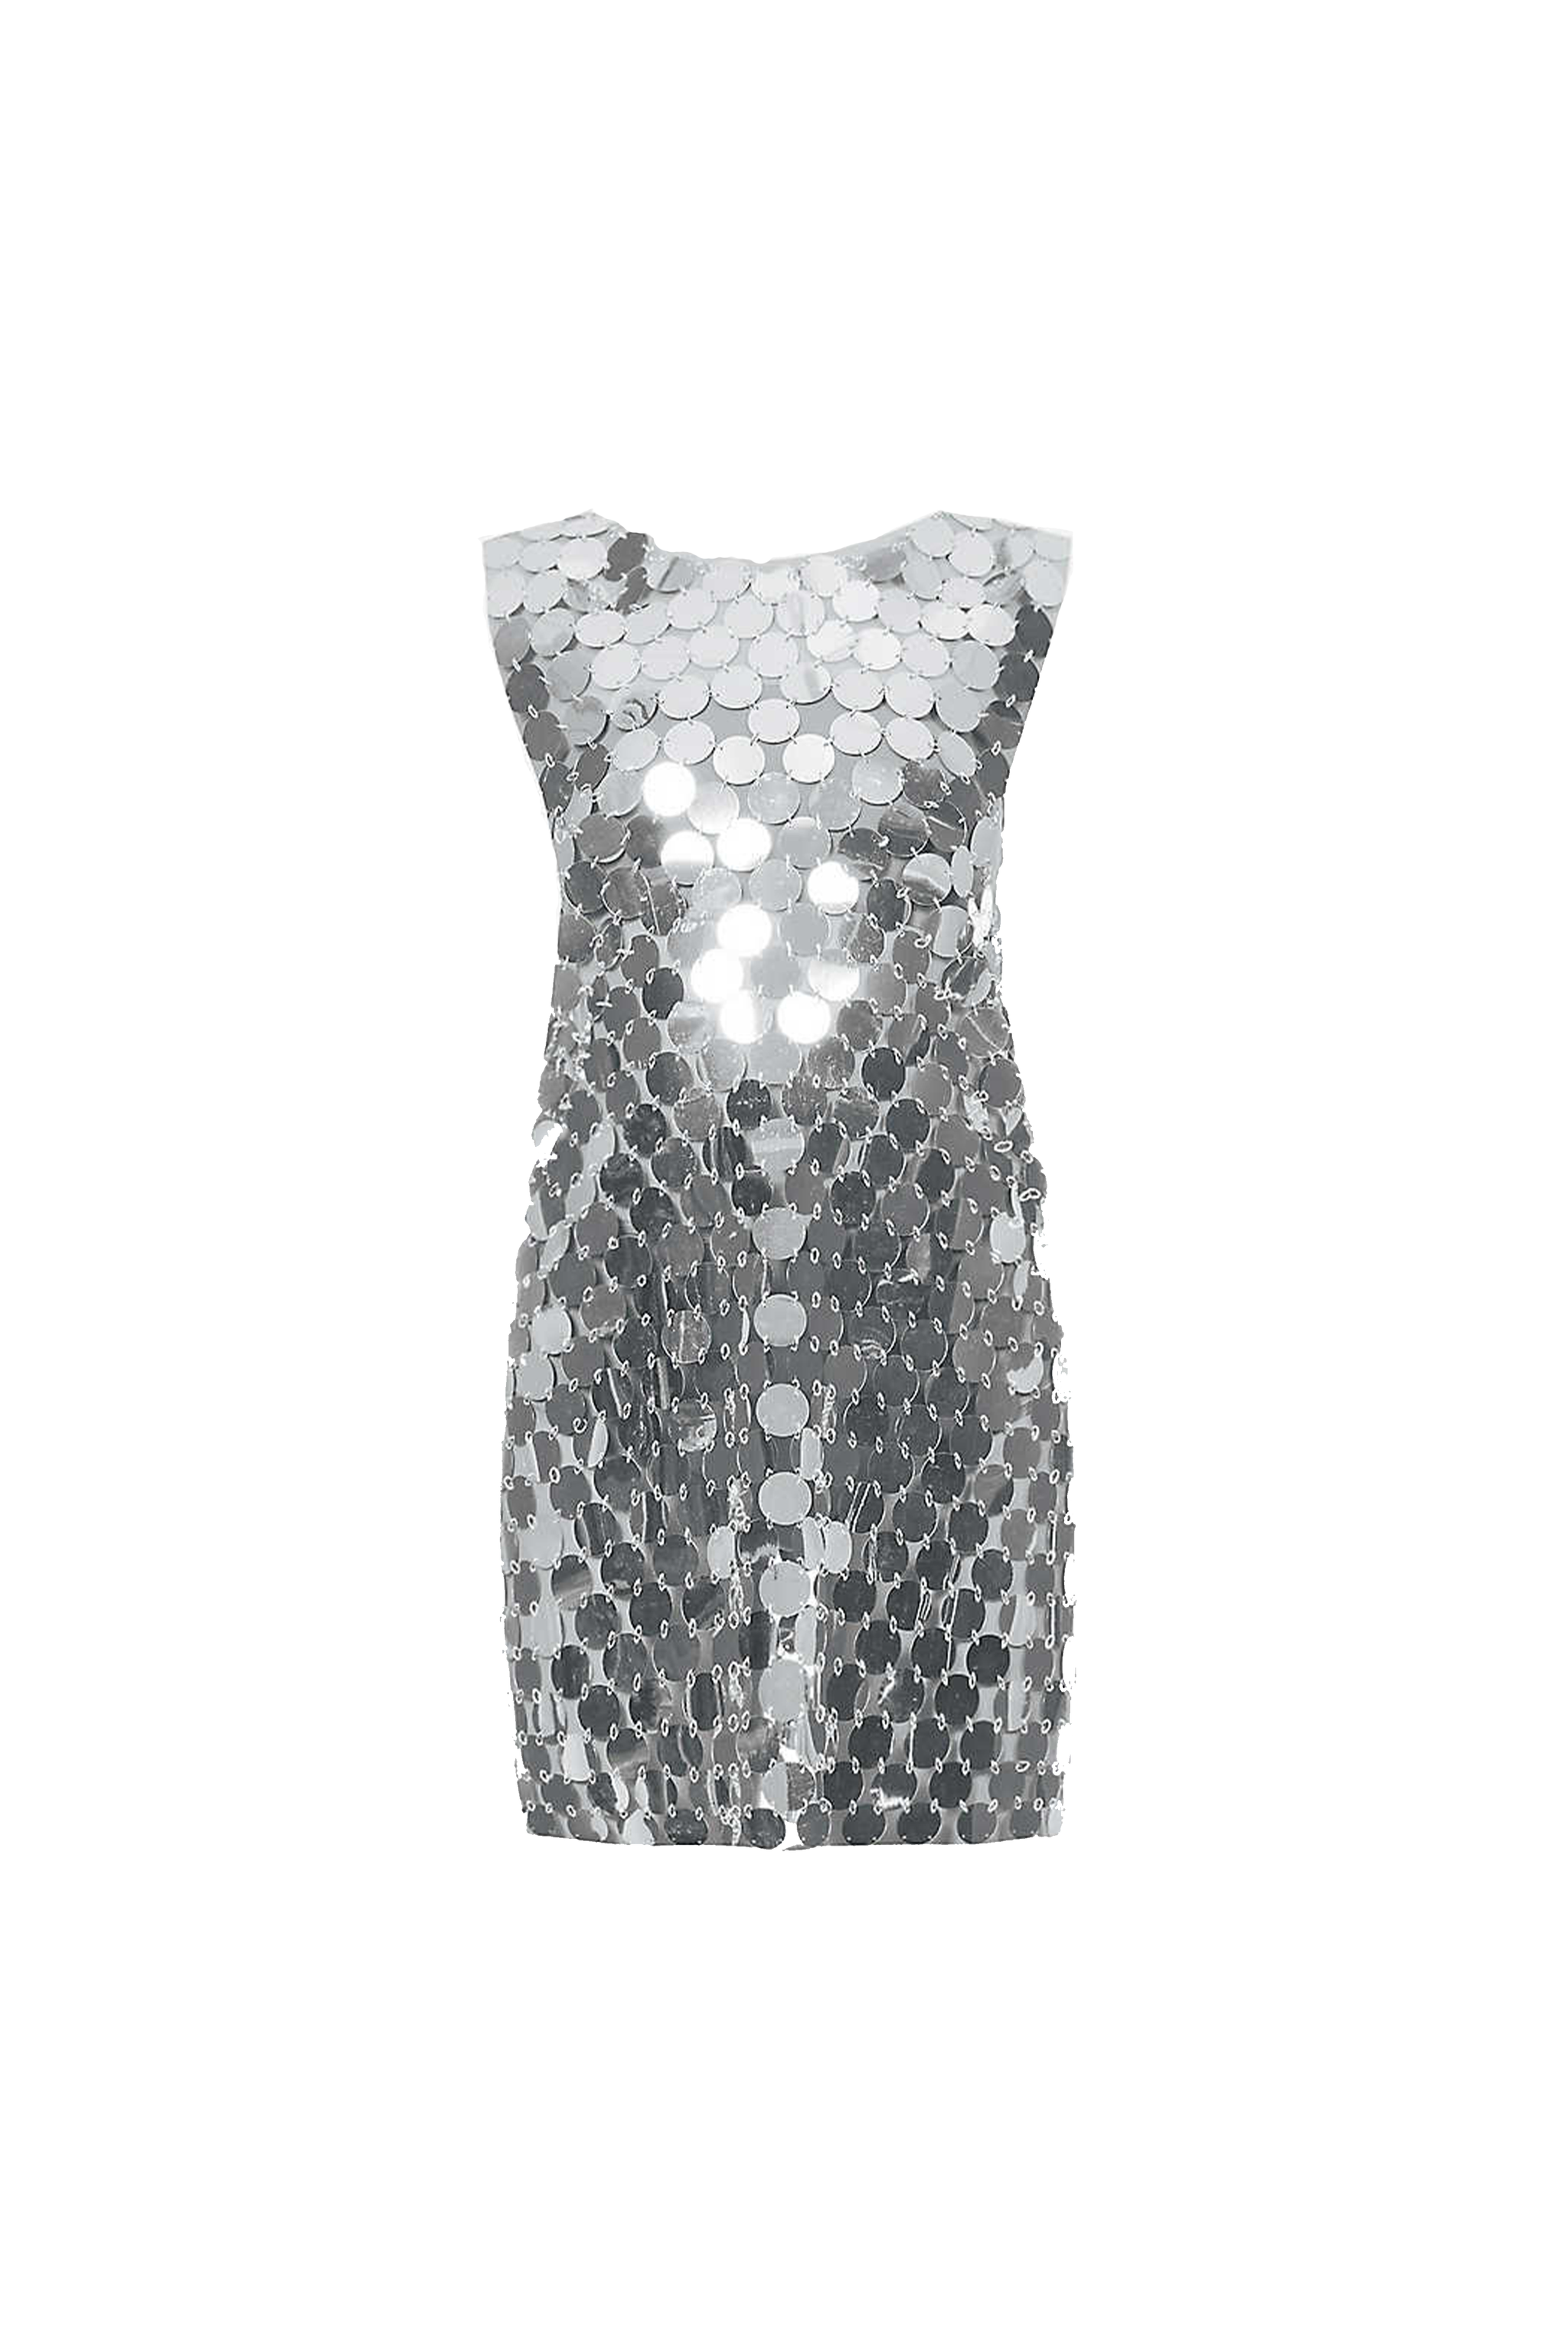 Trixie Silver Metallic Disc Sequin Shift Mini Dress | AmyLynn